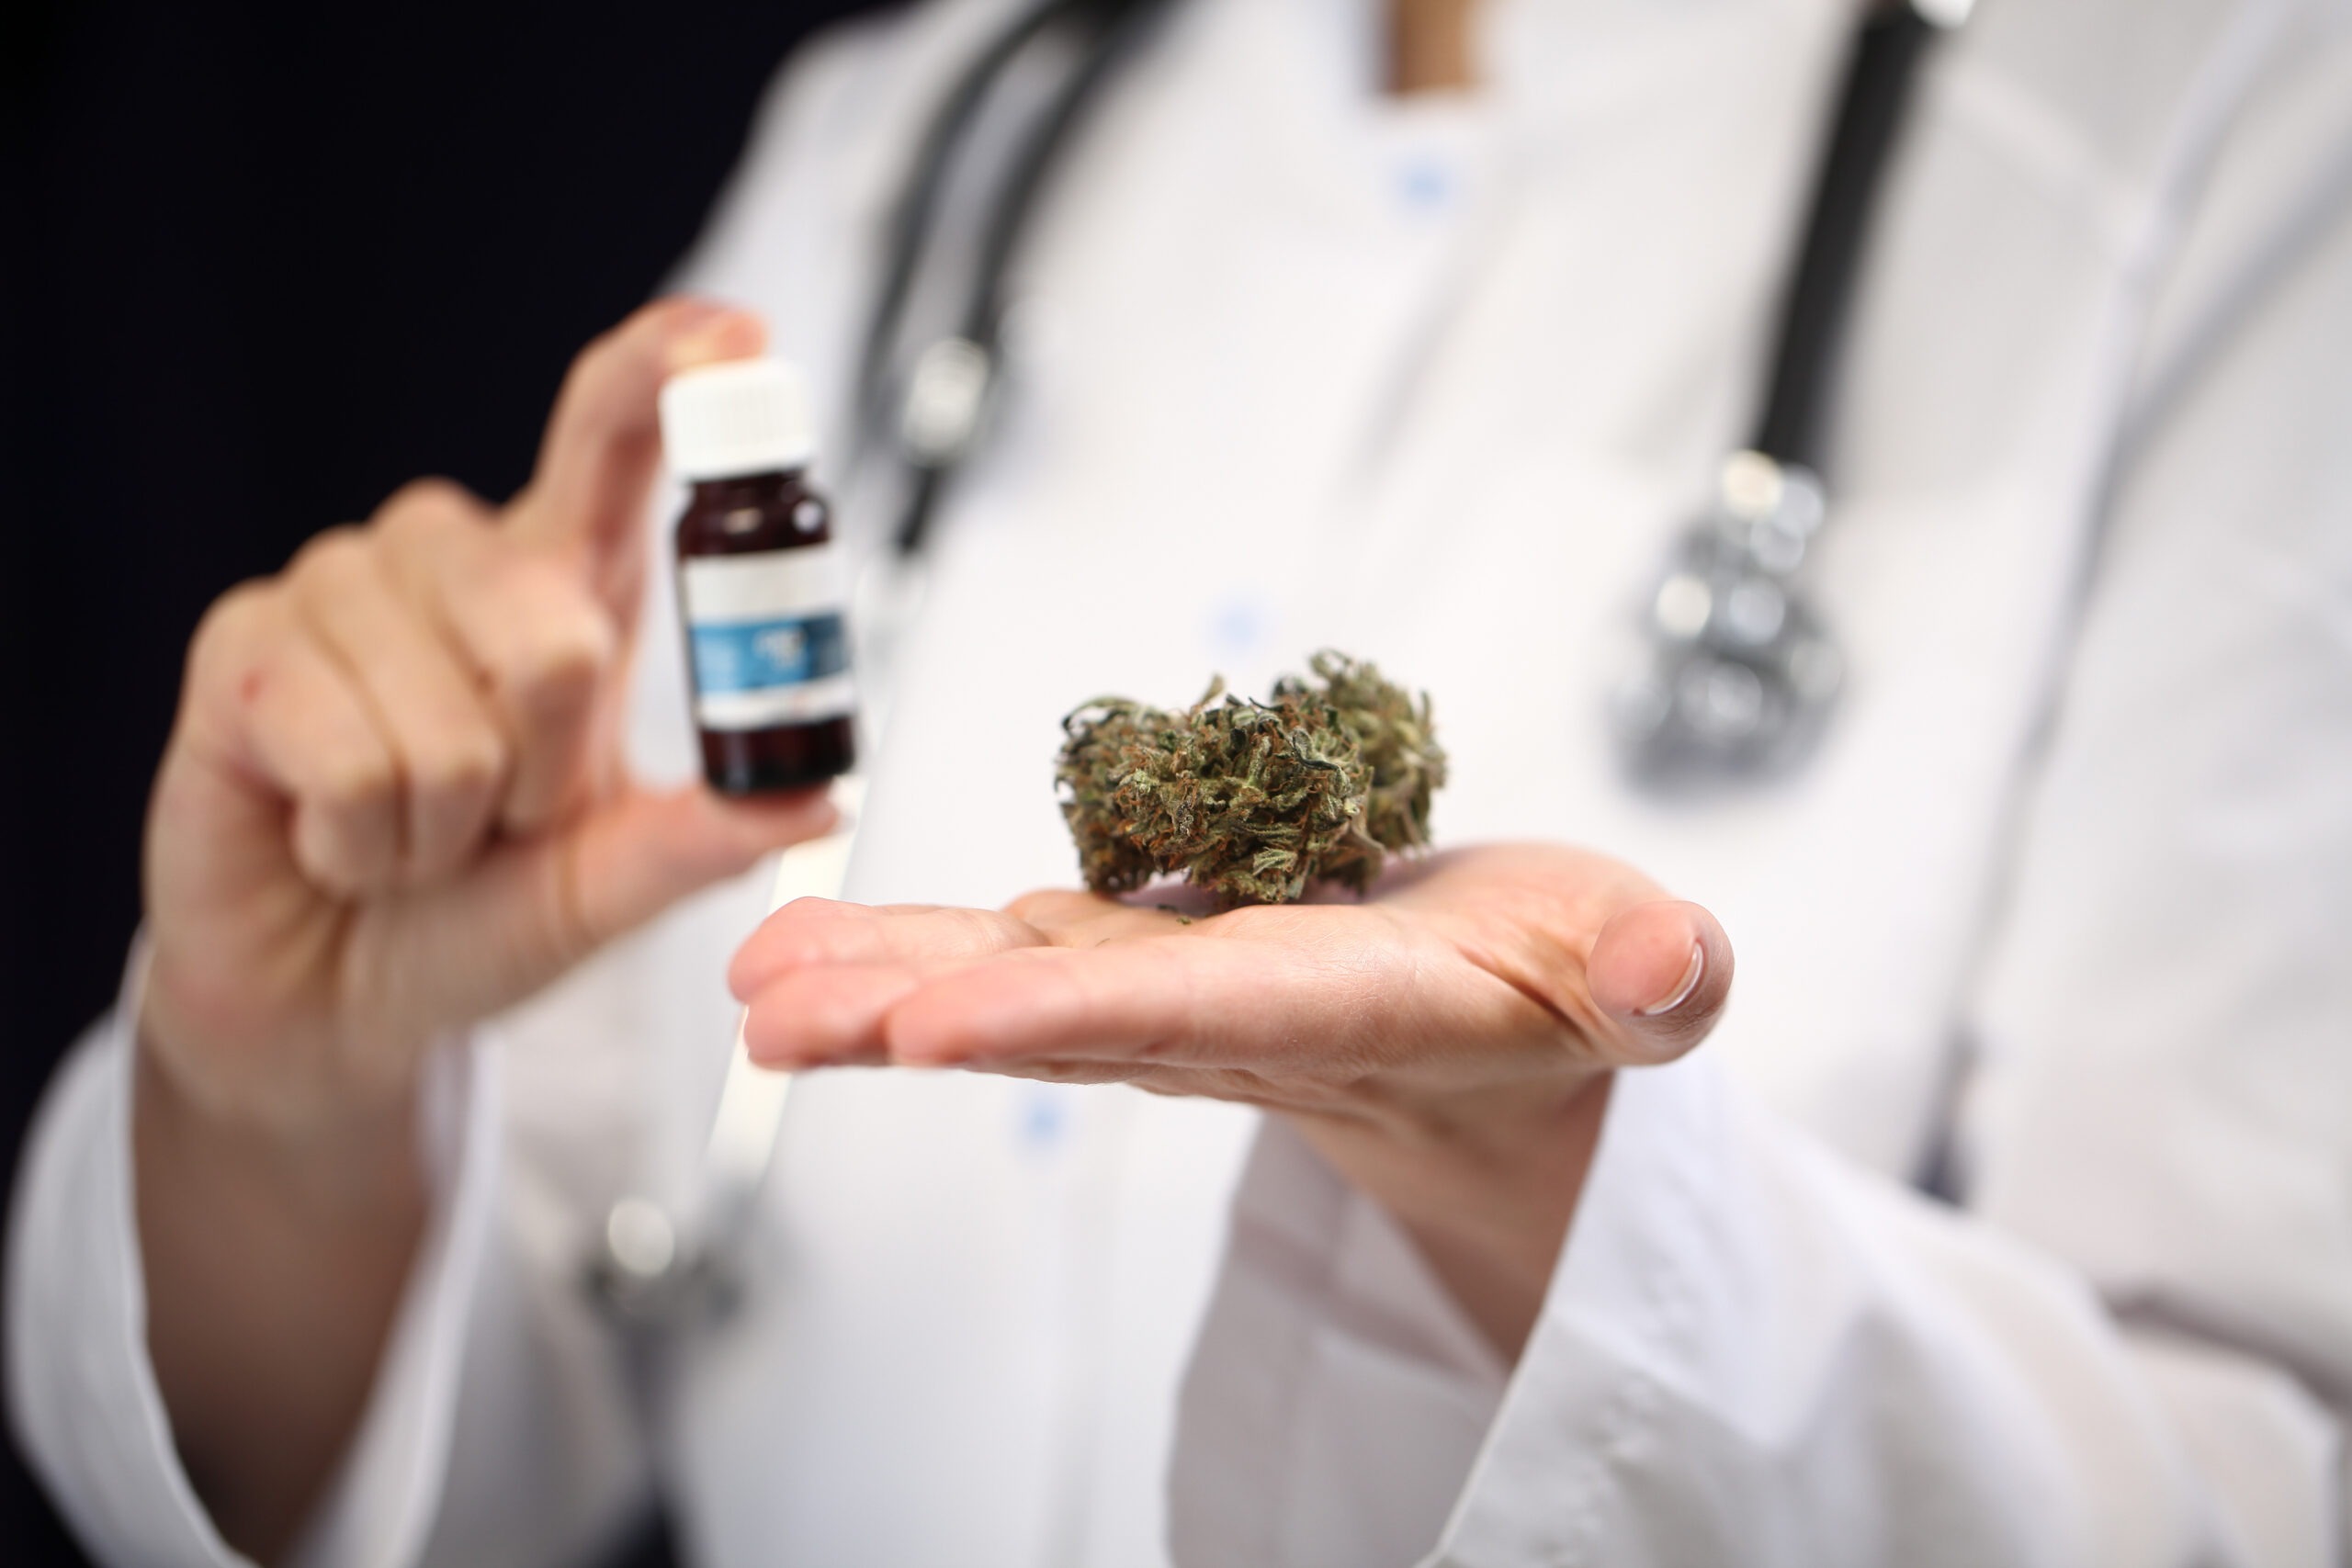 medical marijuana in the hand of a doctor. cannabis alternative